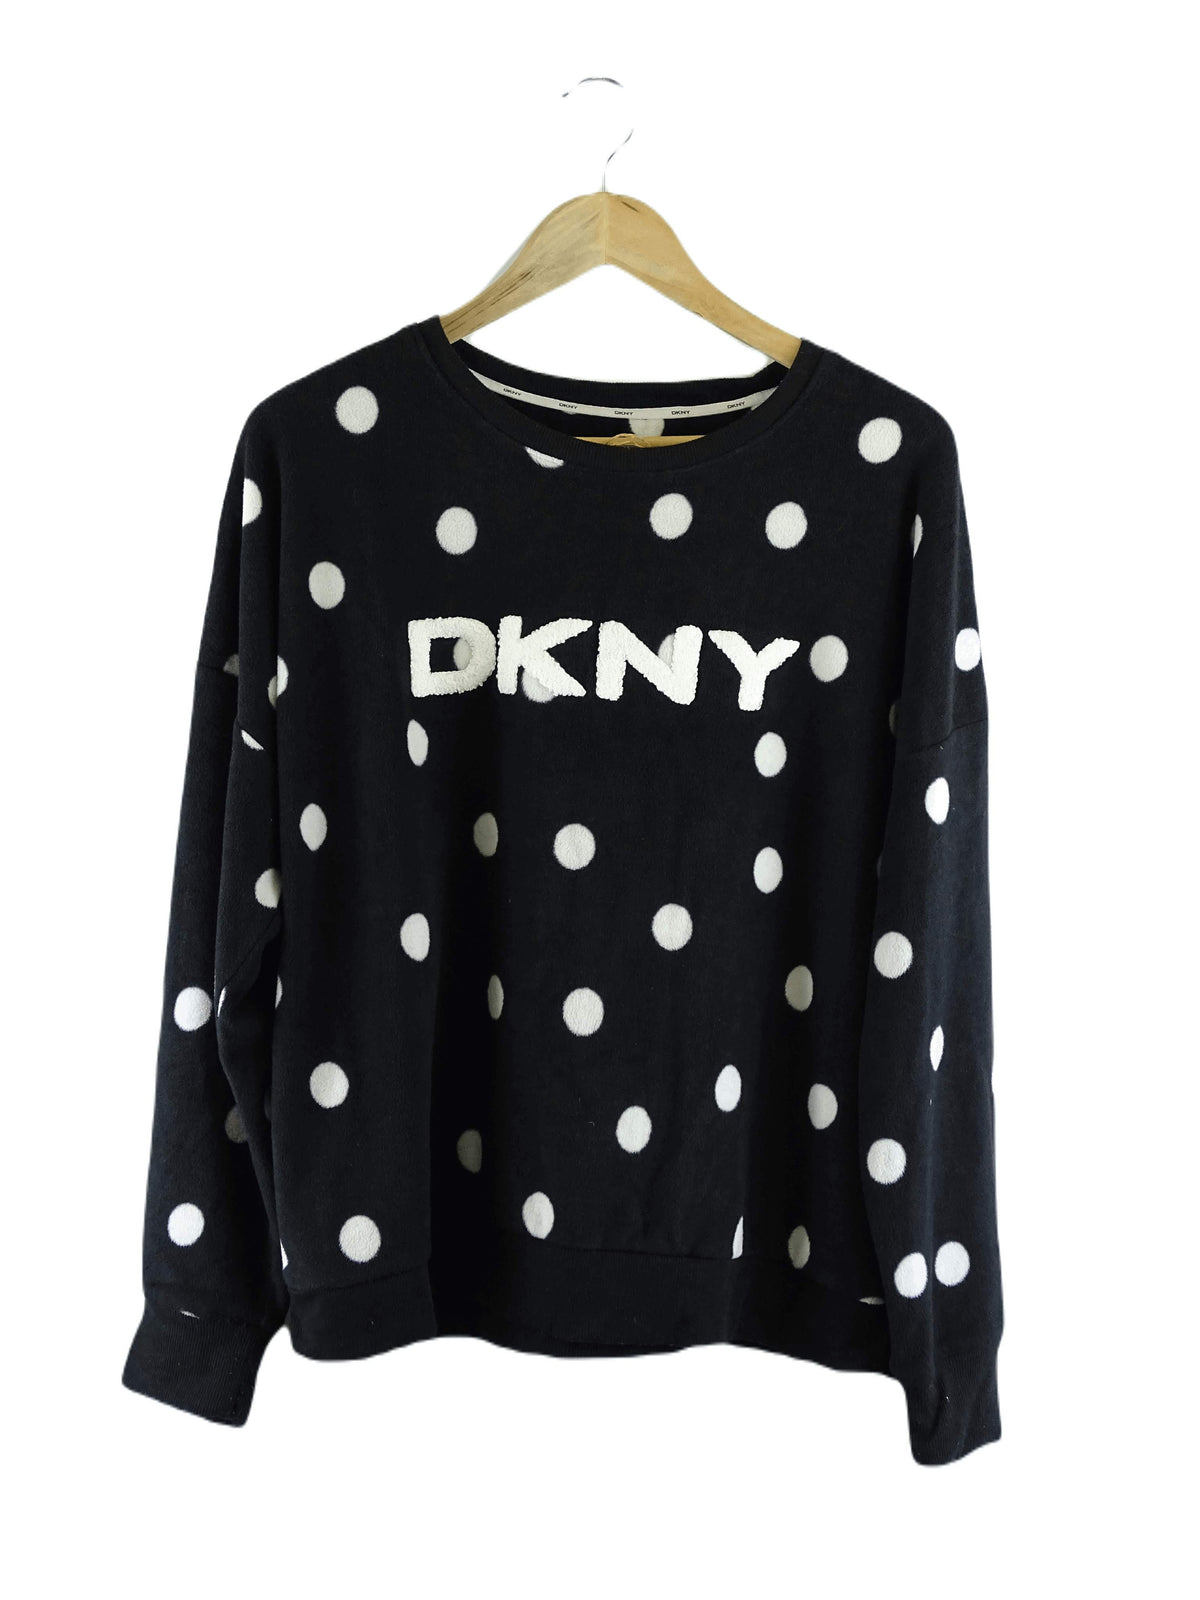 DKNY Black and White Polka Dot Fleece Crewneck Jumper L